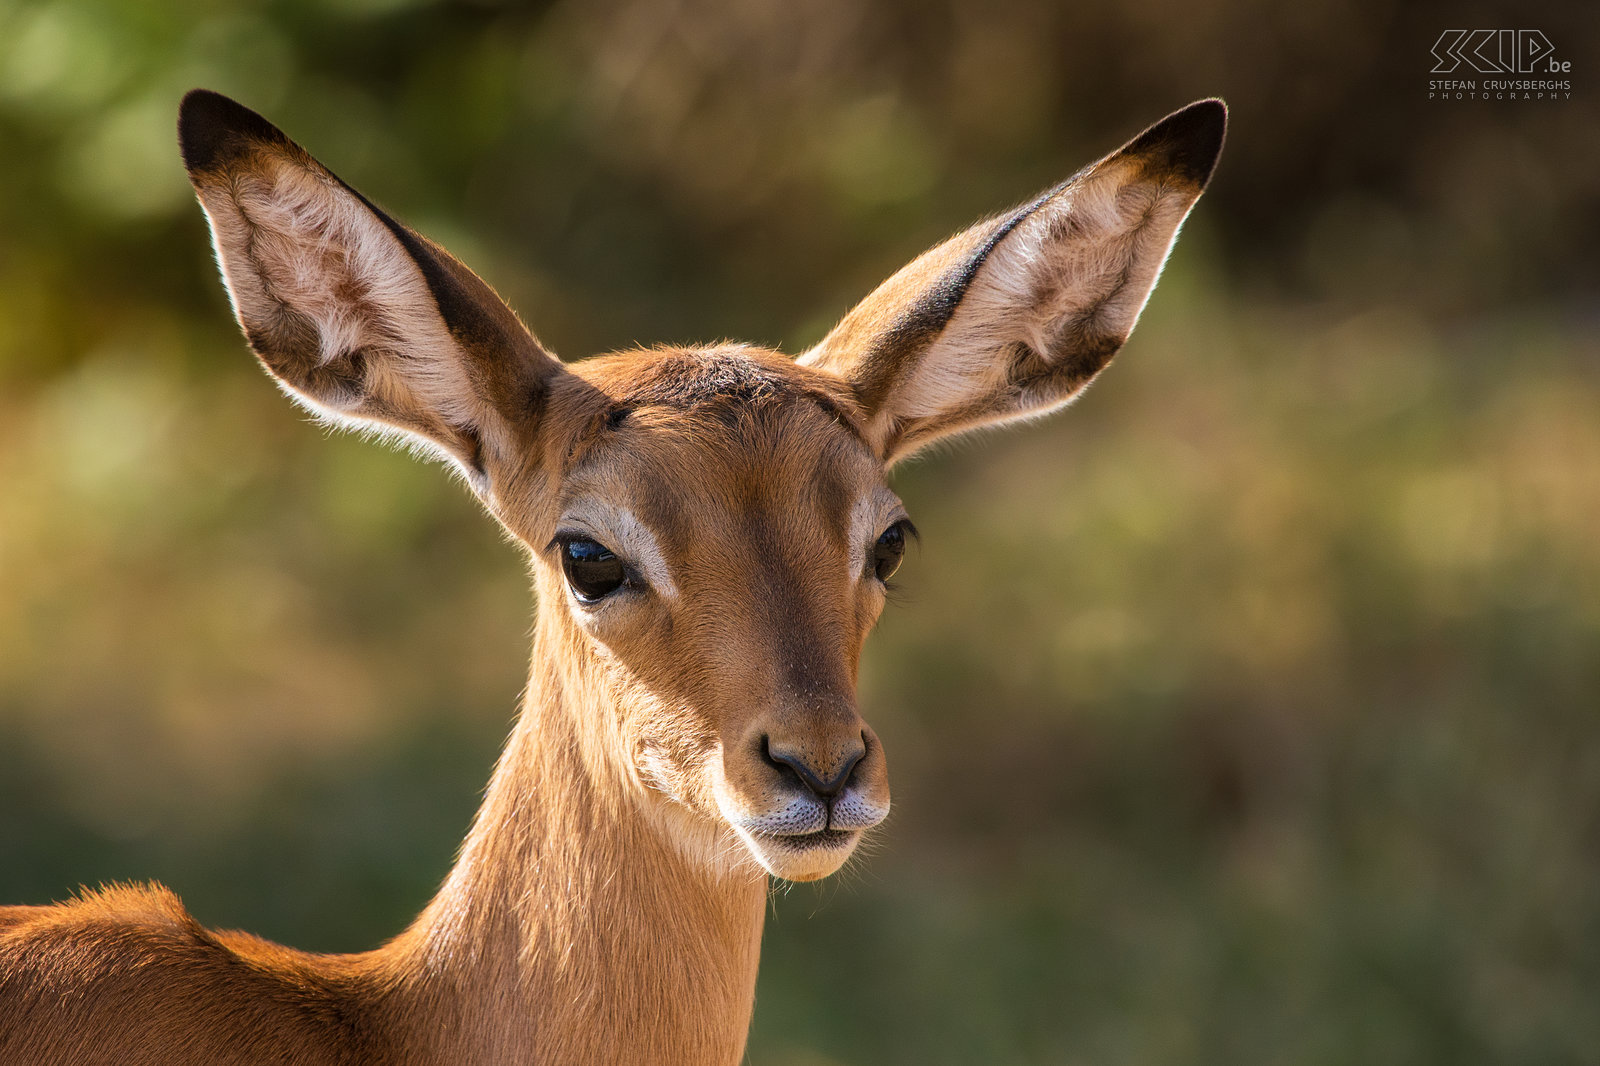 Samburu - Impala Close-up photo of a female impala. Stefan Cruysberghs